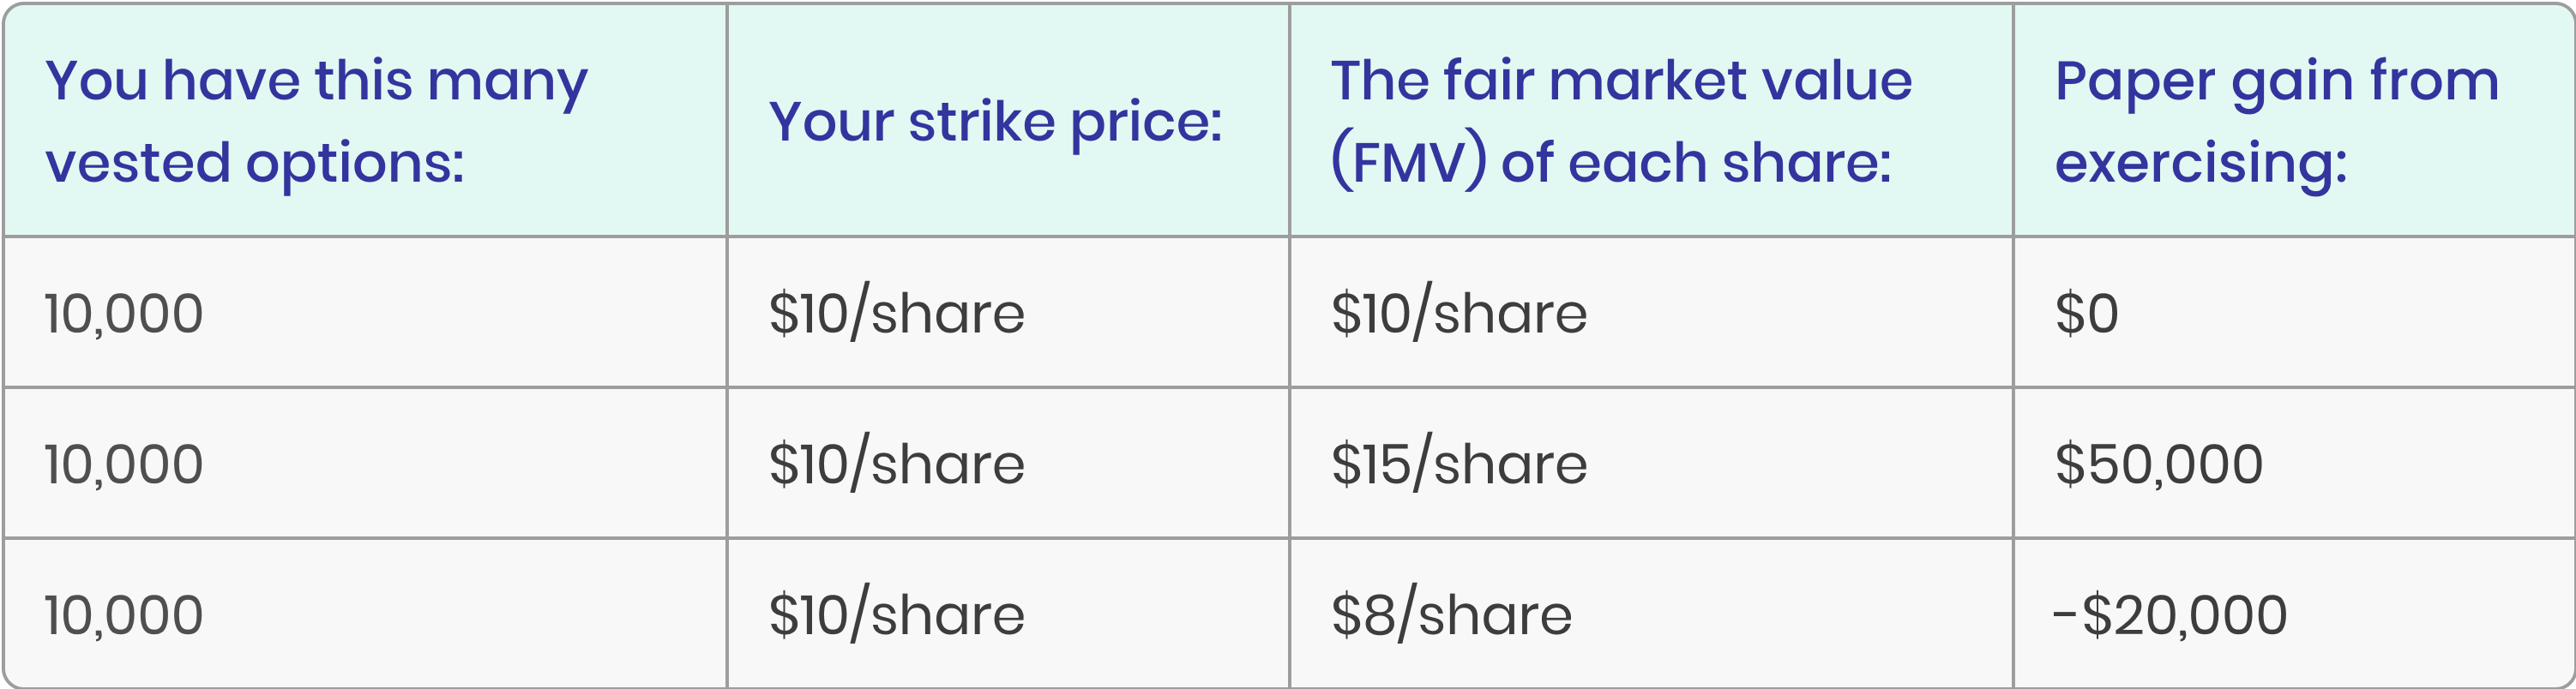 exercise stock options scenario table 